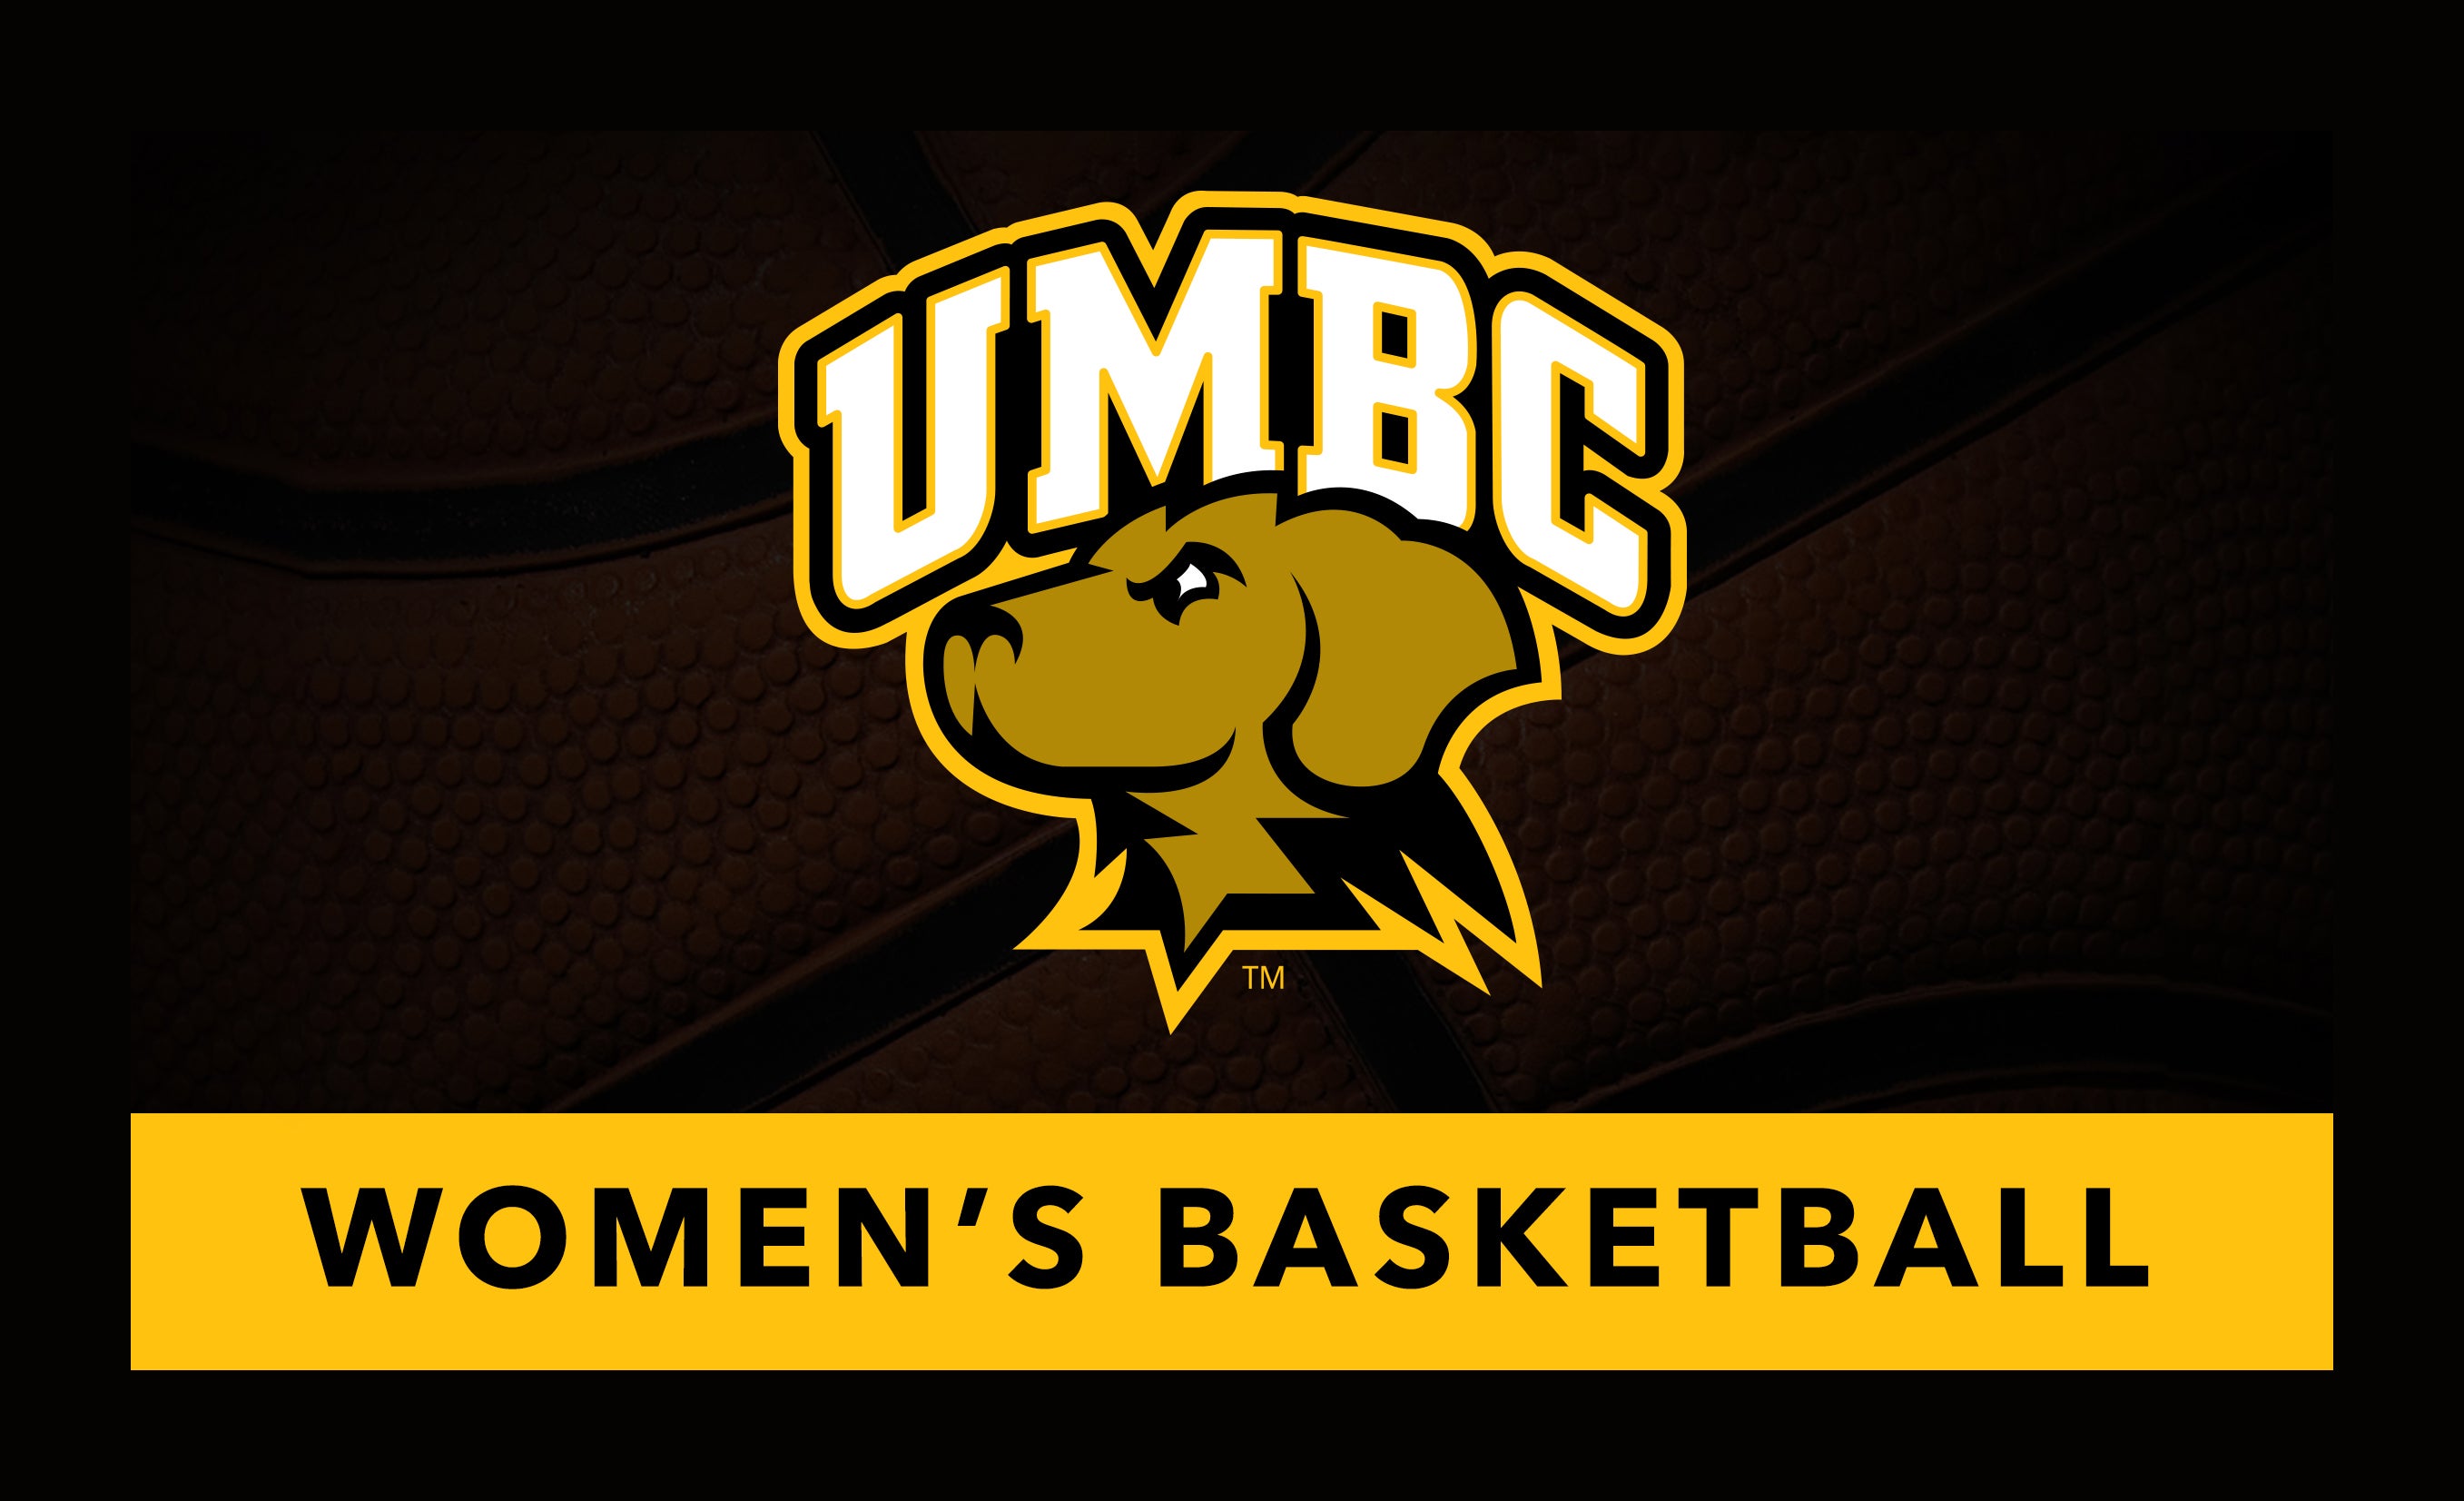 UMBC Retrievers Women's Basketball vs. UAlbany Danes Womens Basketball in Baltimore promo photo for Me + 3 Promotional  presale offer code